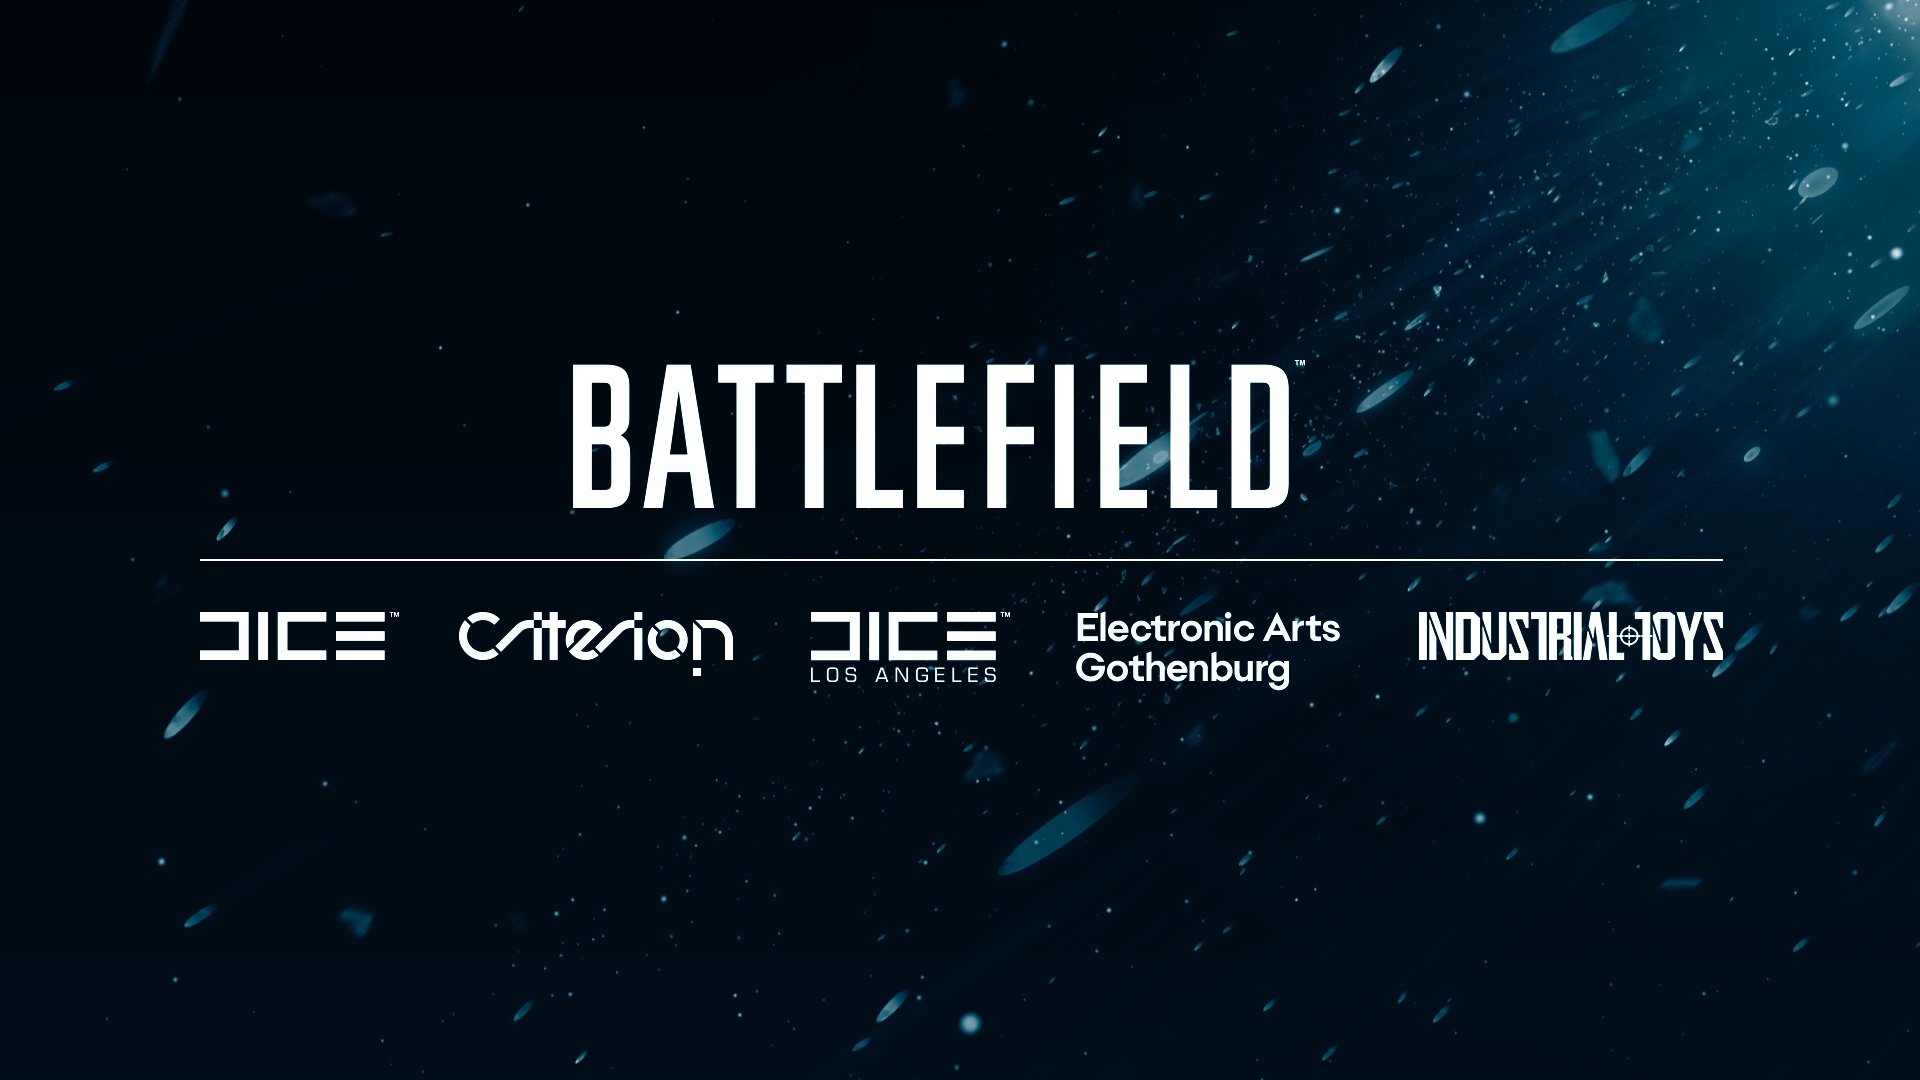 The battlefield logo